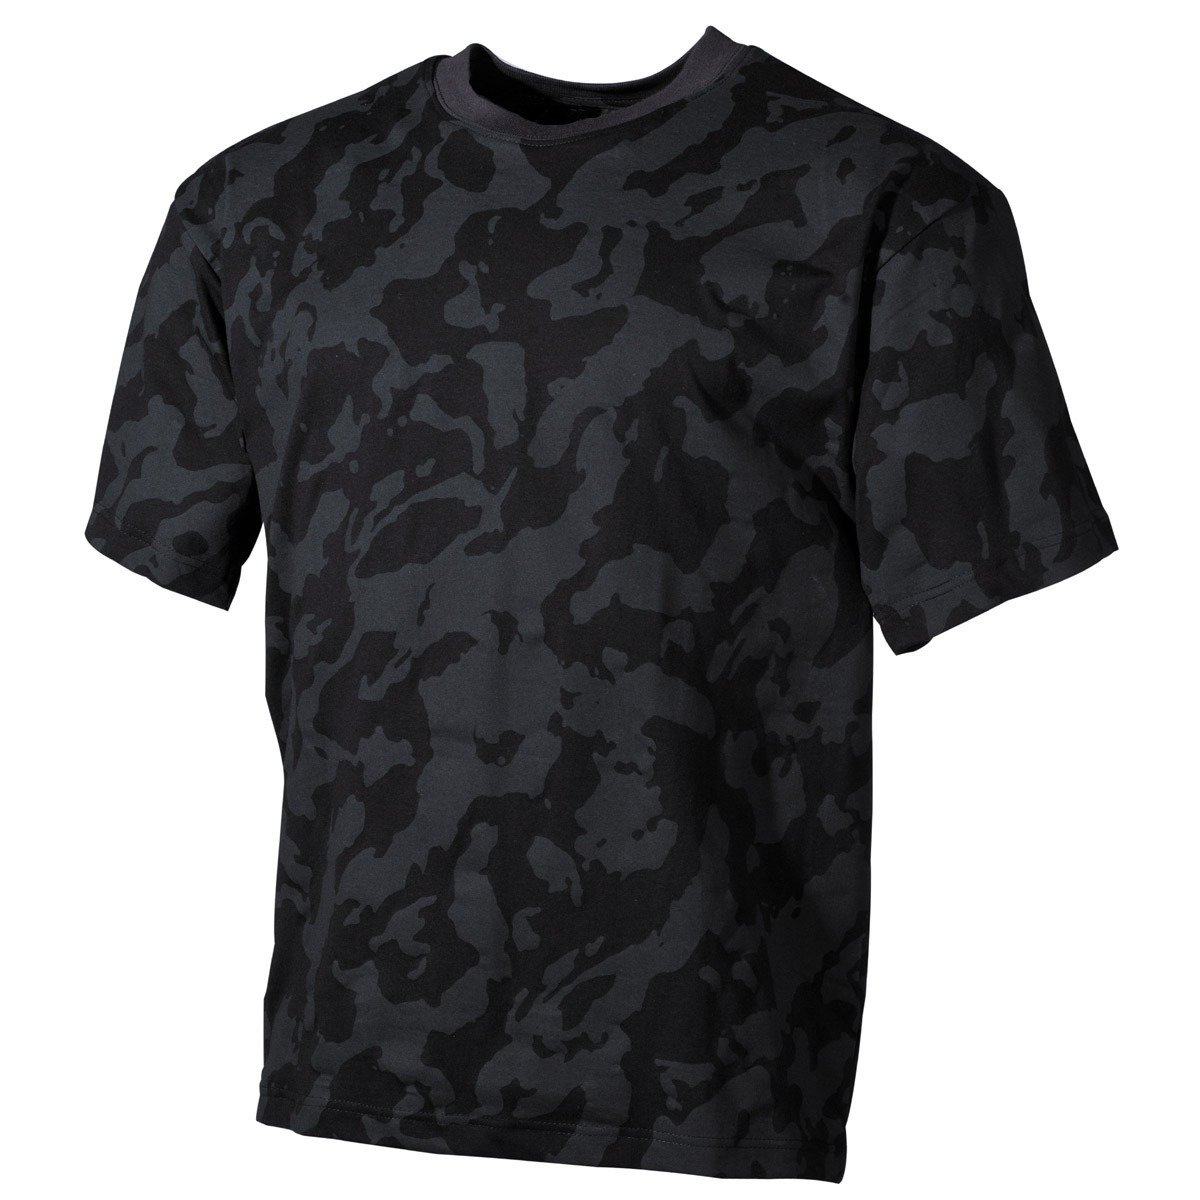 MFH camouflage T-shirt pattern night camo, 170g/m2 Night Camo | Apparel ...